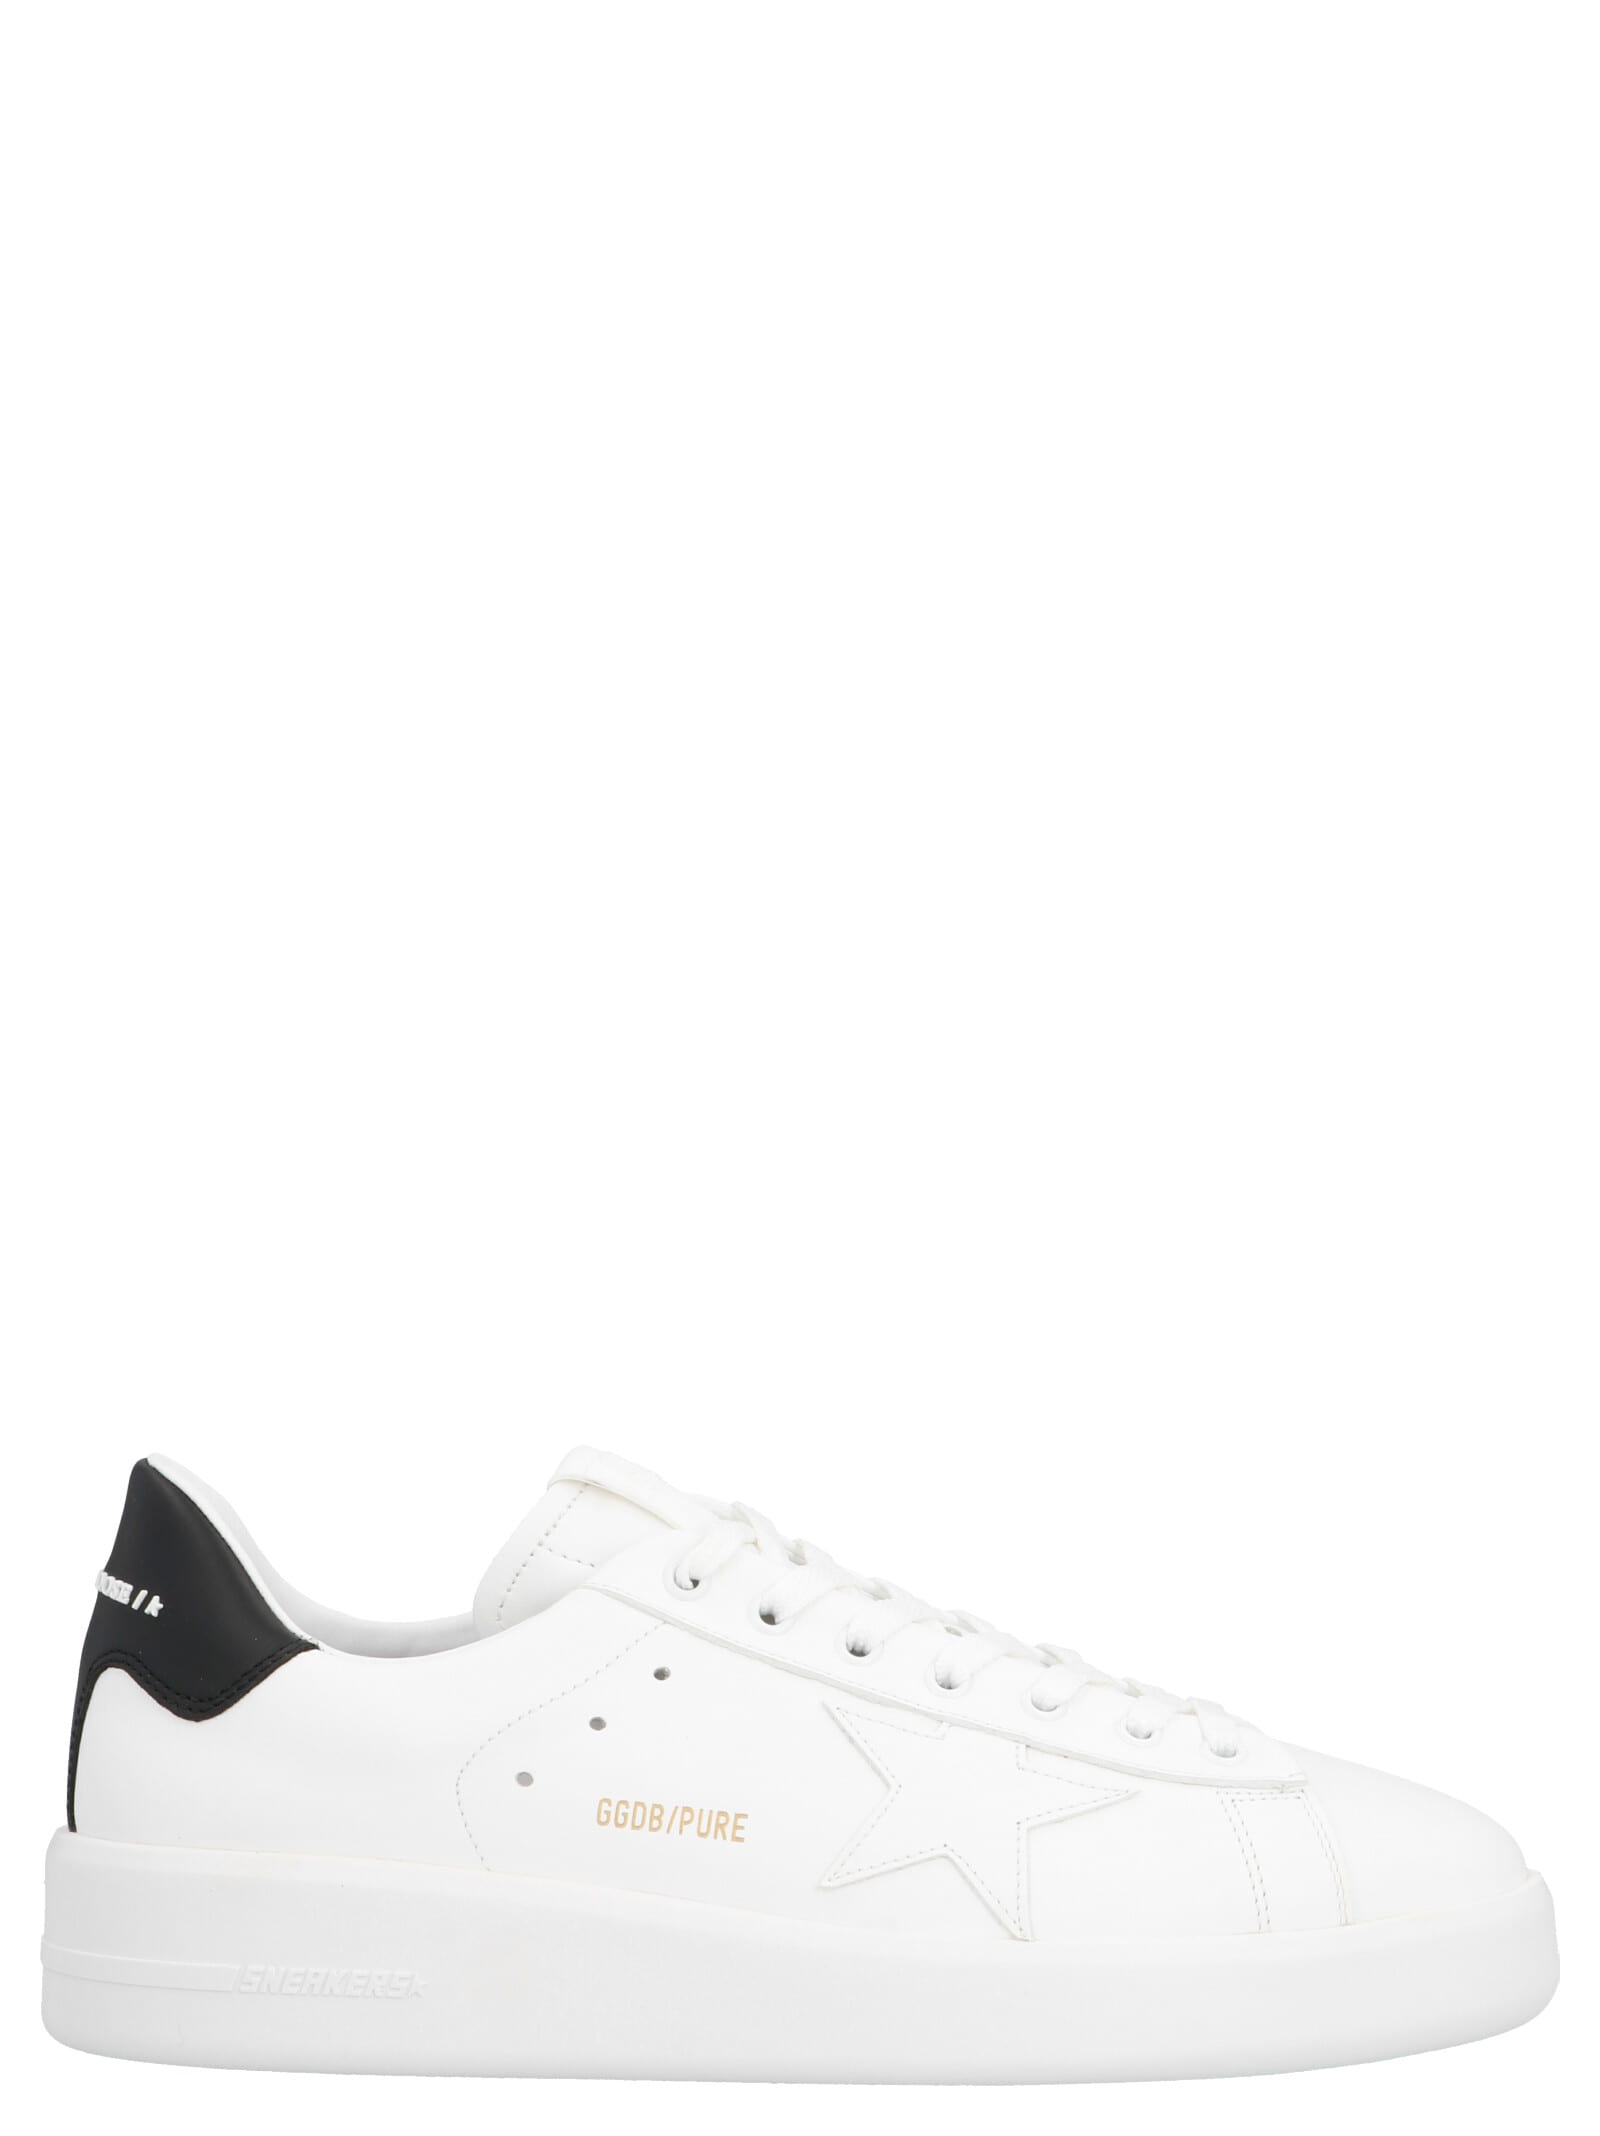 Shop Golden Goose Purestar Sneakers In White/black